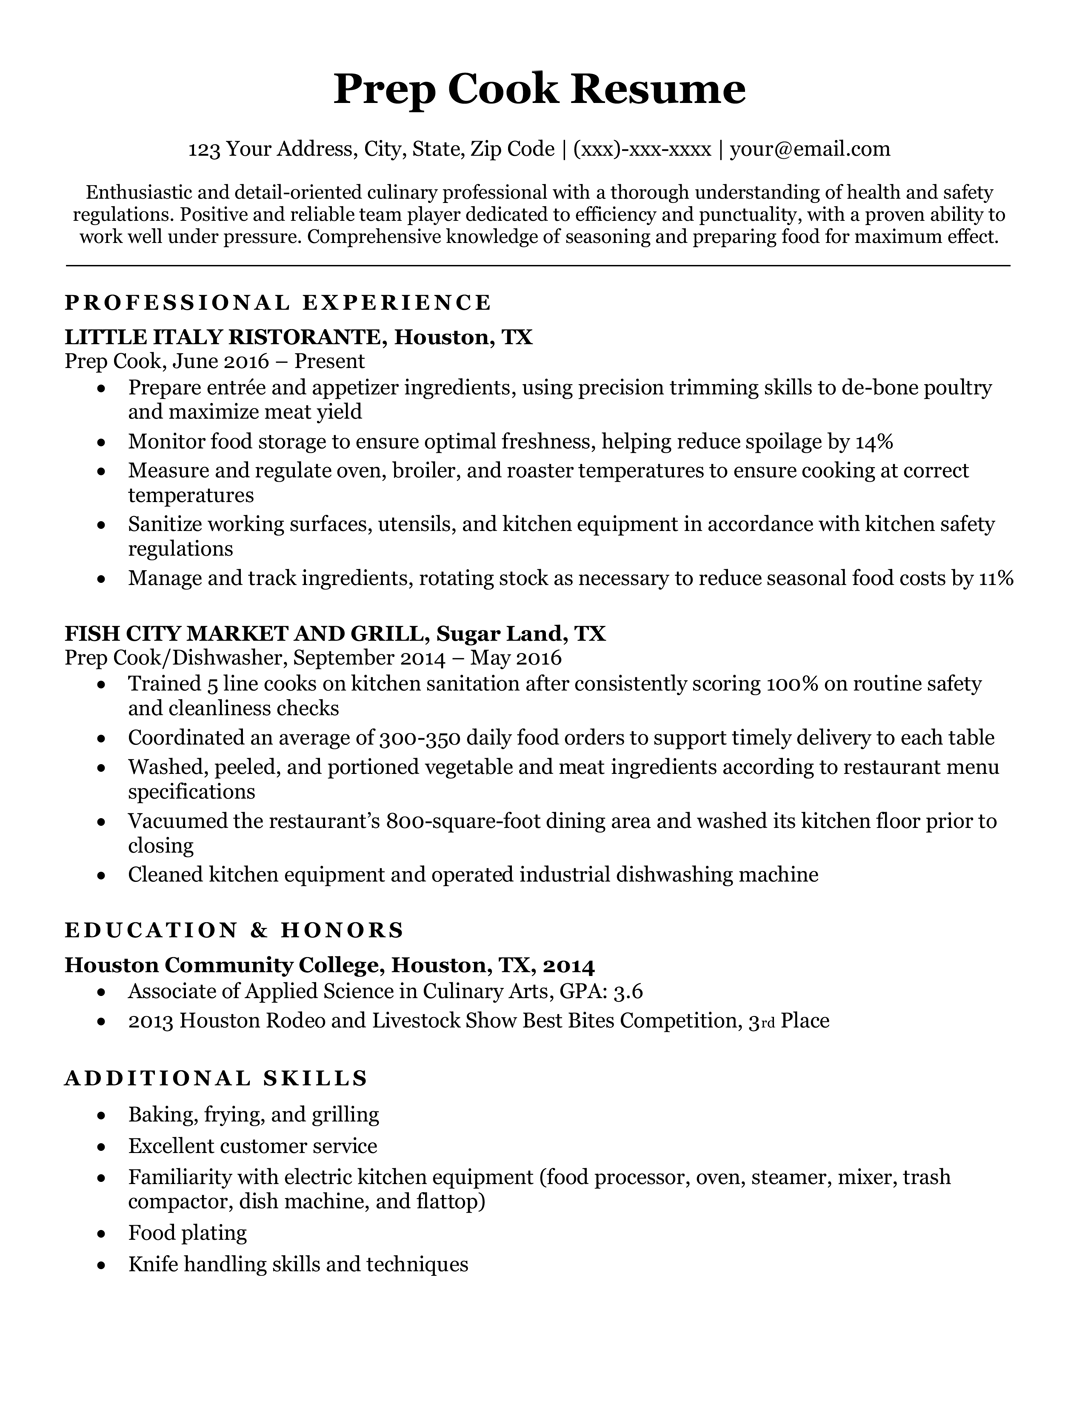 Prep cook resume sample